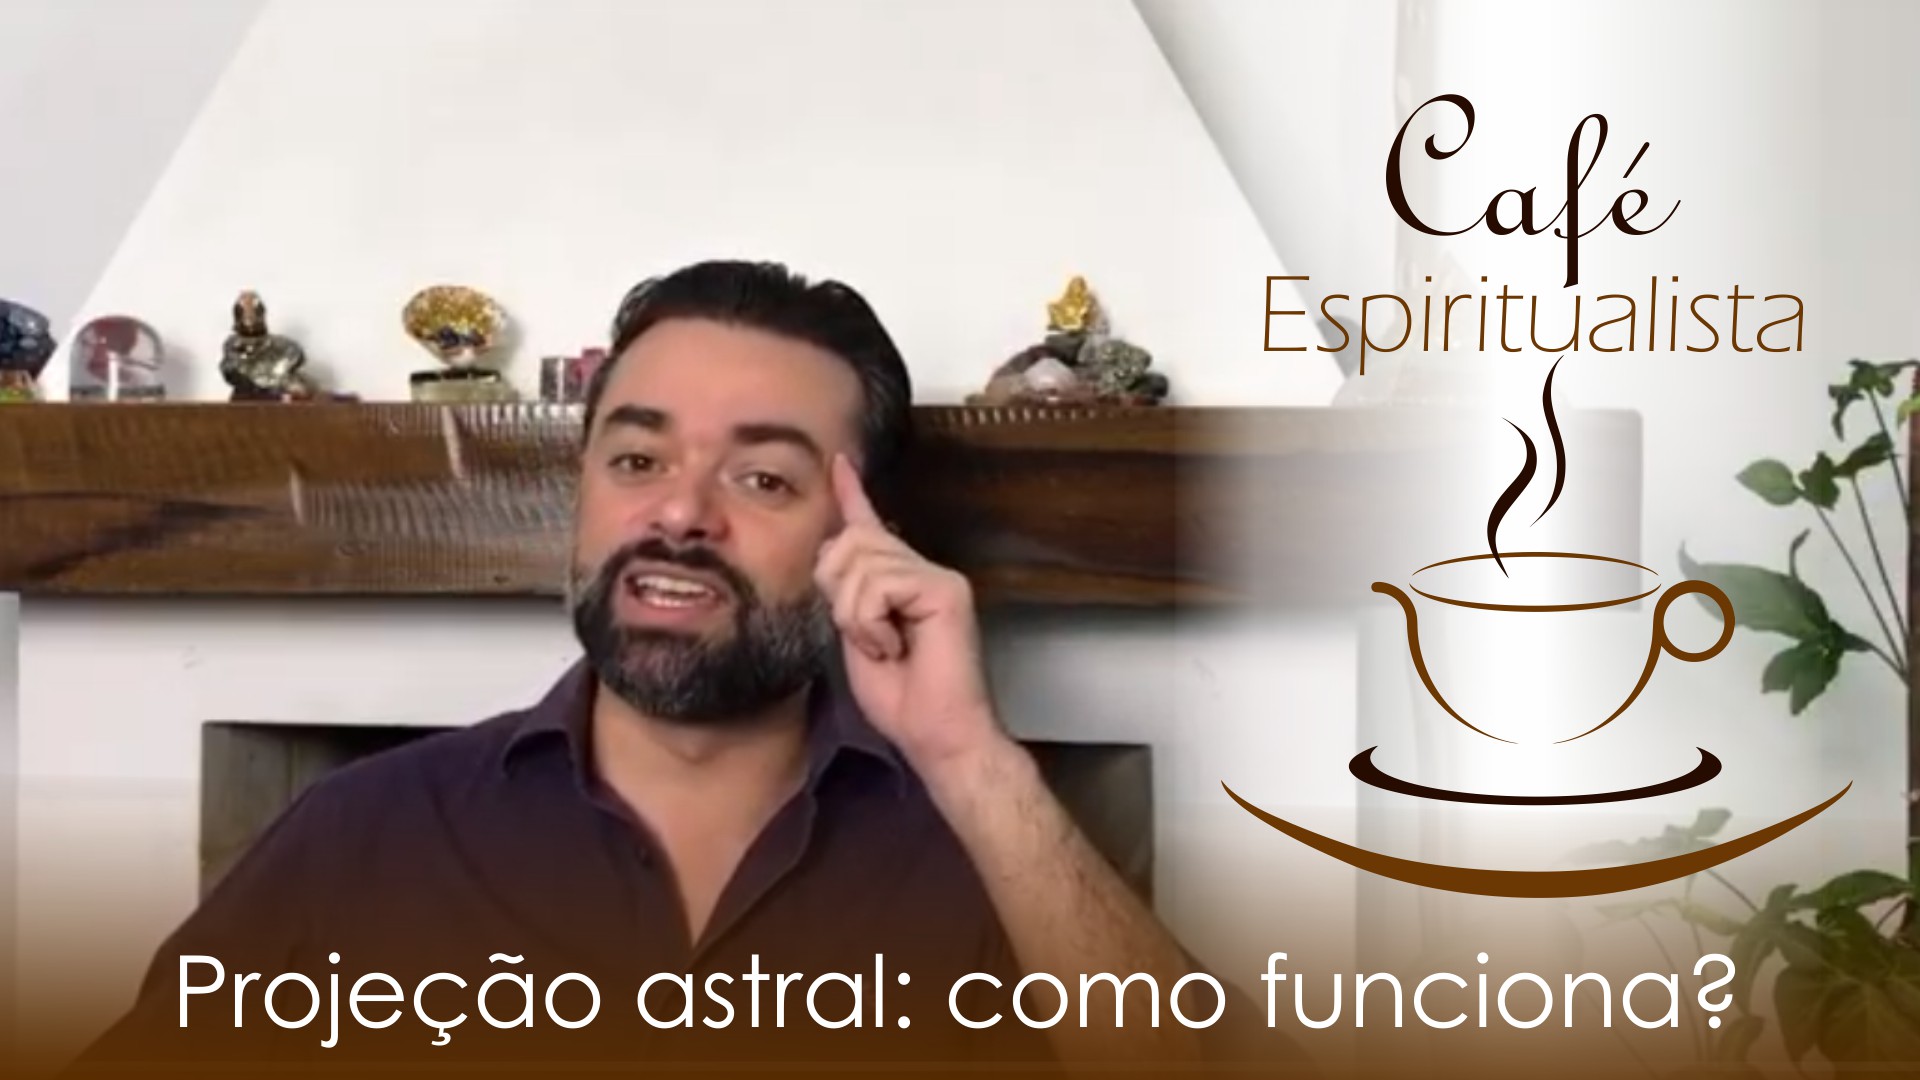 Daniel Souza apresentando o programa Café Espiritualista